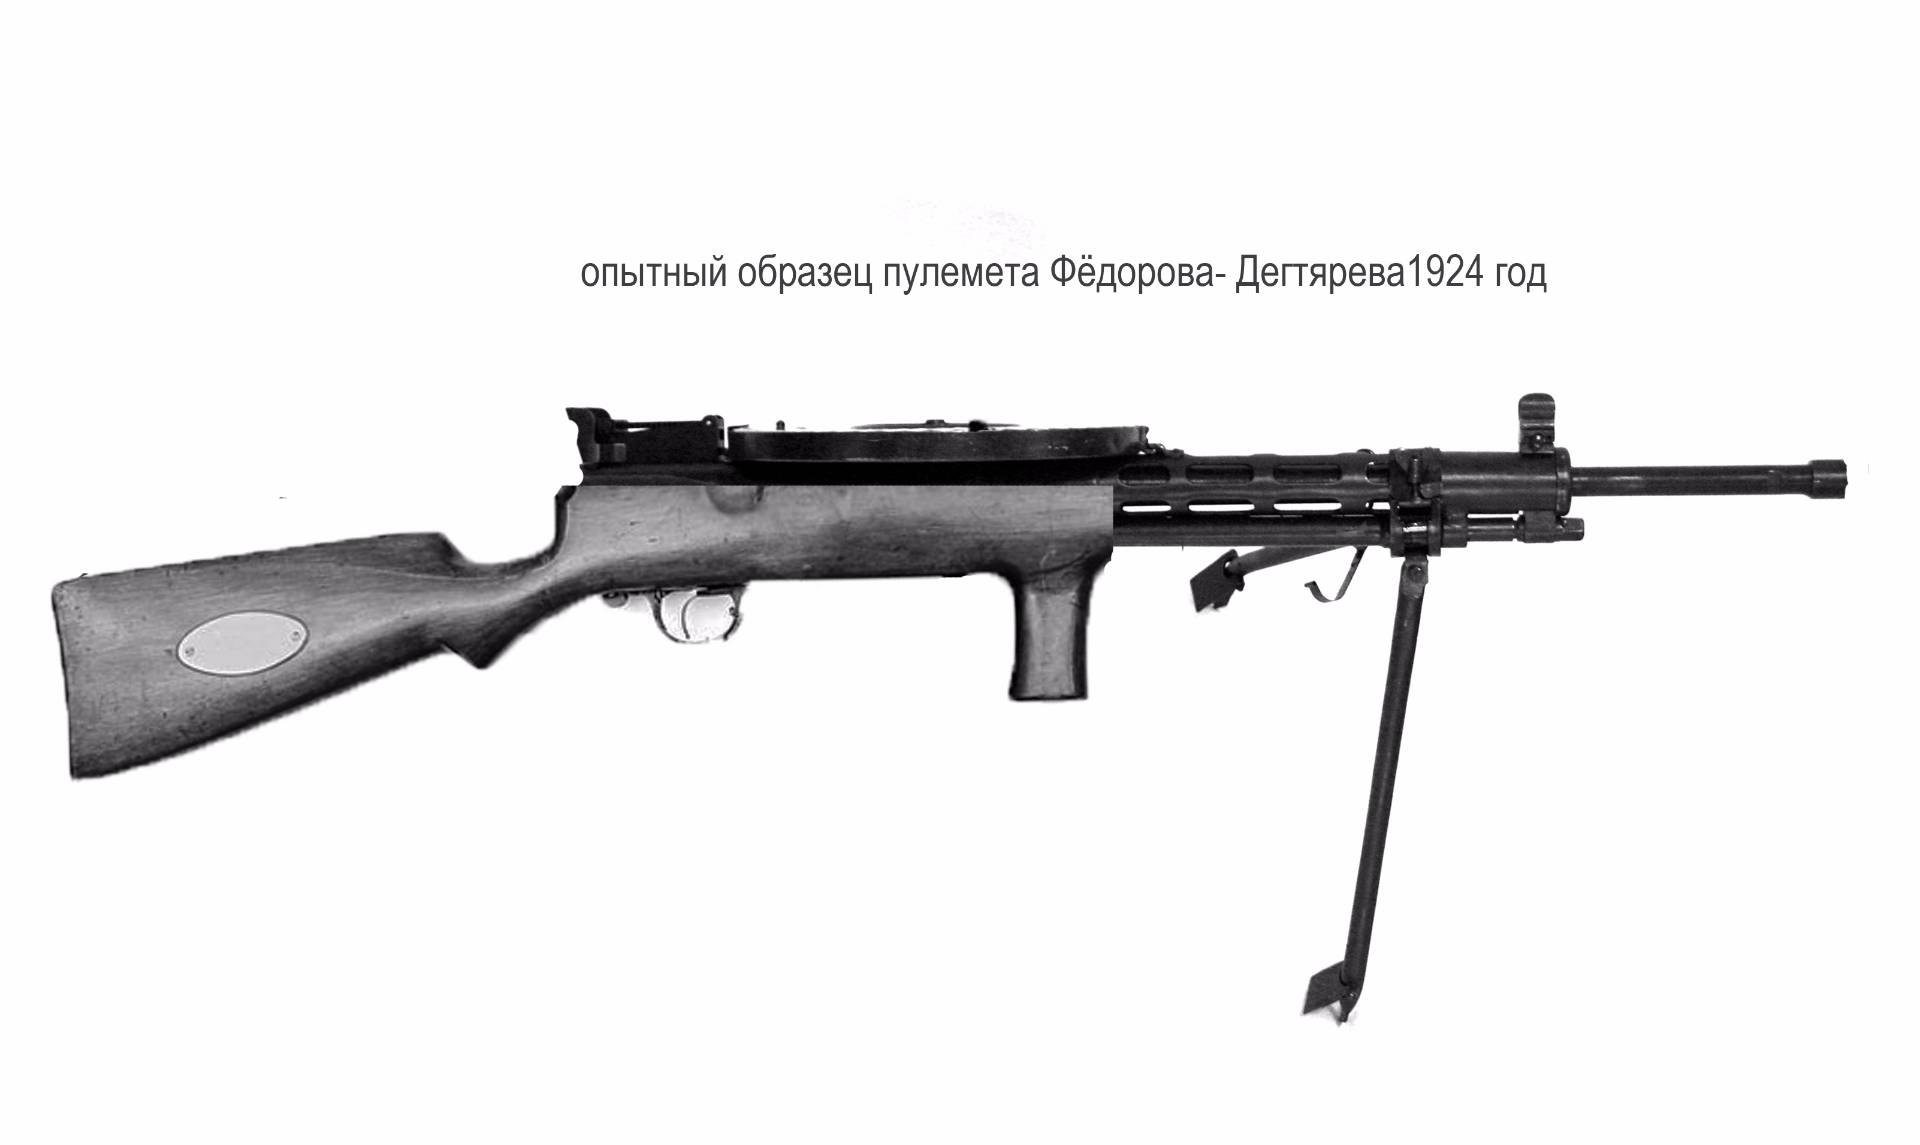 Пулемет Федорова-Дегтярева